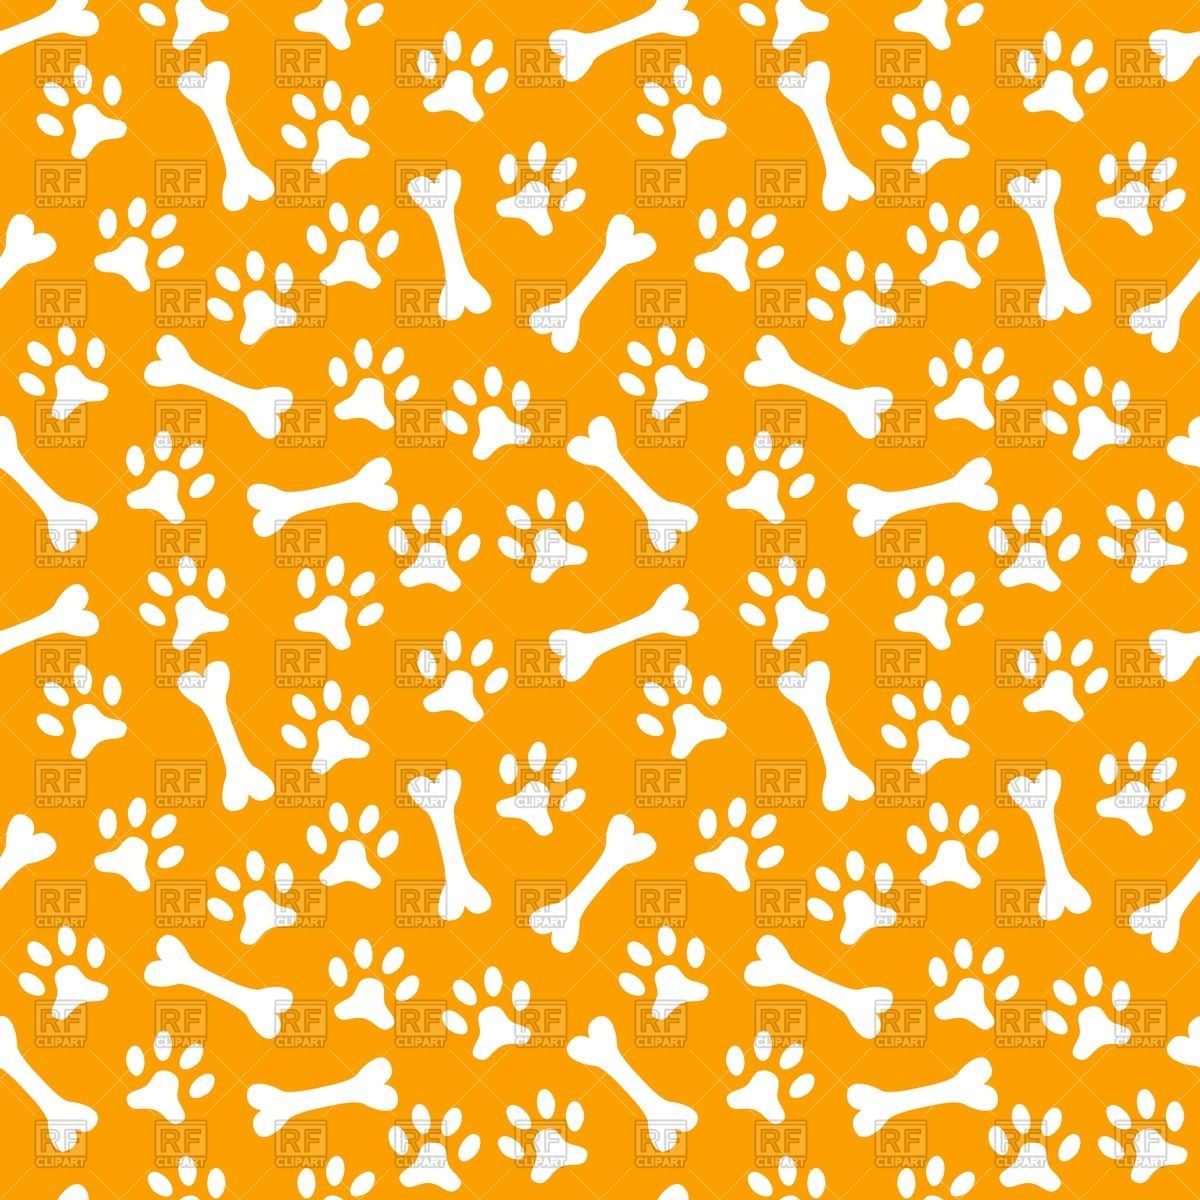 [41+] Dog Paws Wallpaper | WallpaperSafari.com